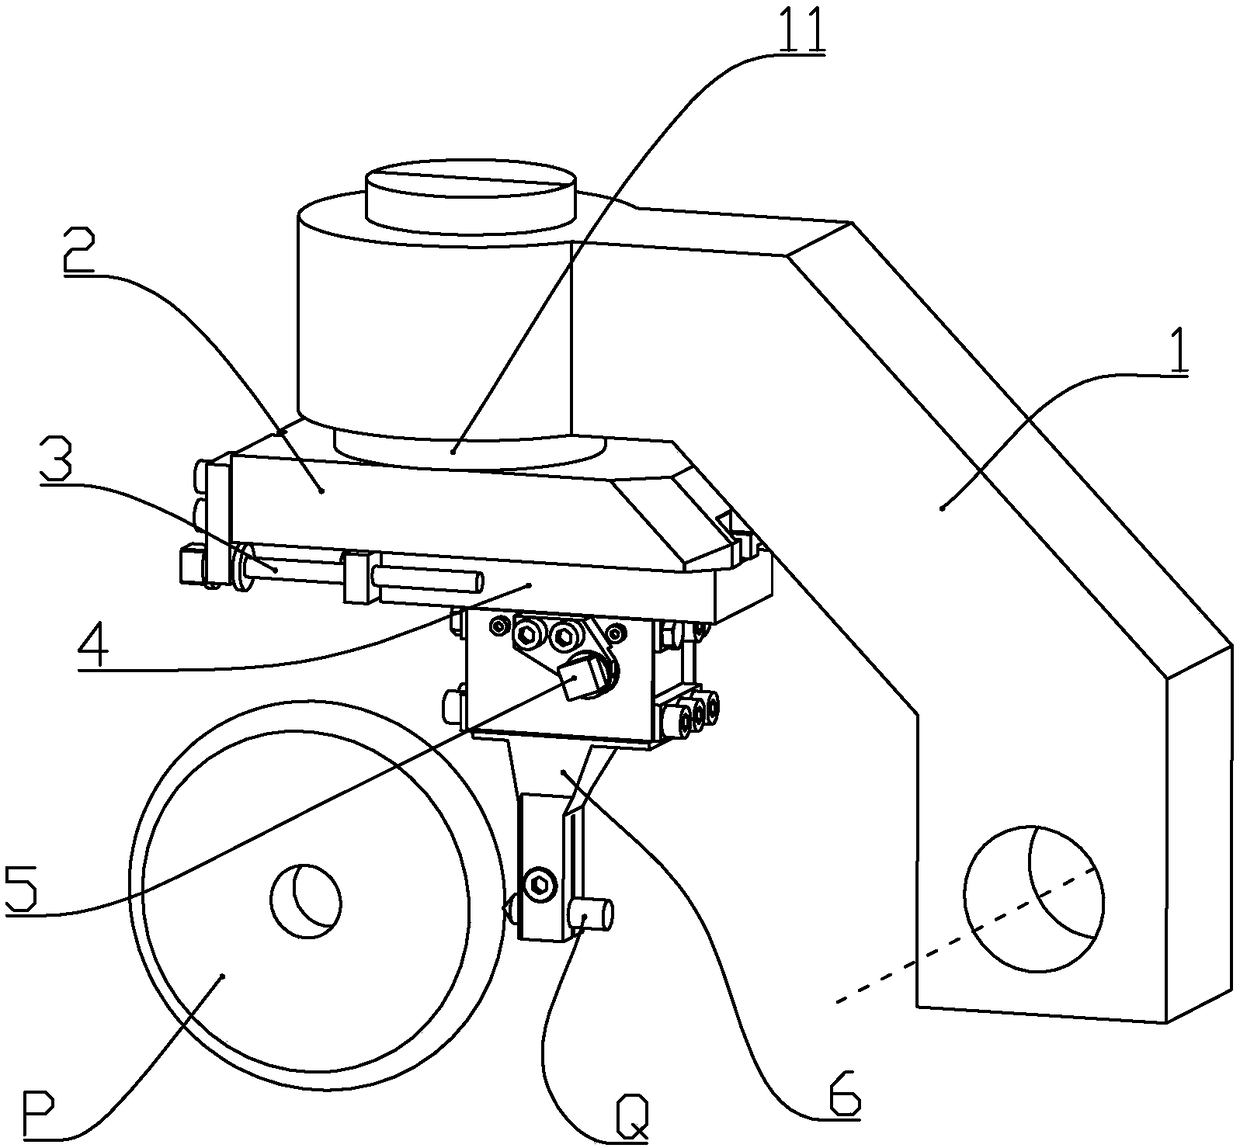 Deep groove ball bearing outer ring groove grinder grinding wheel dresser